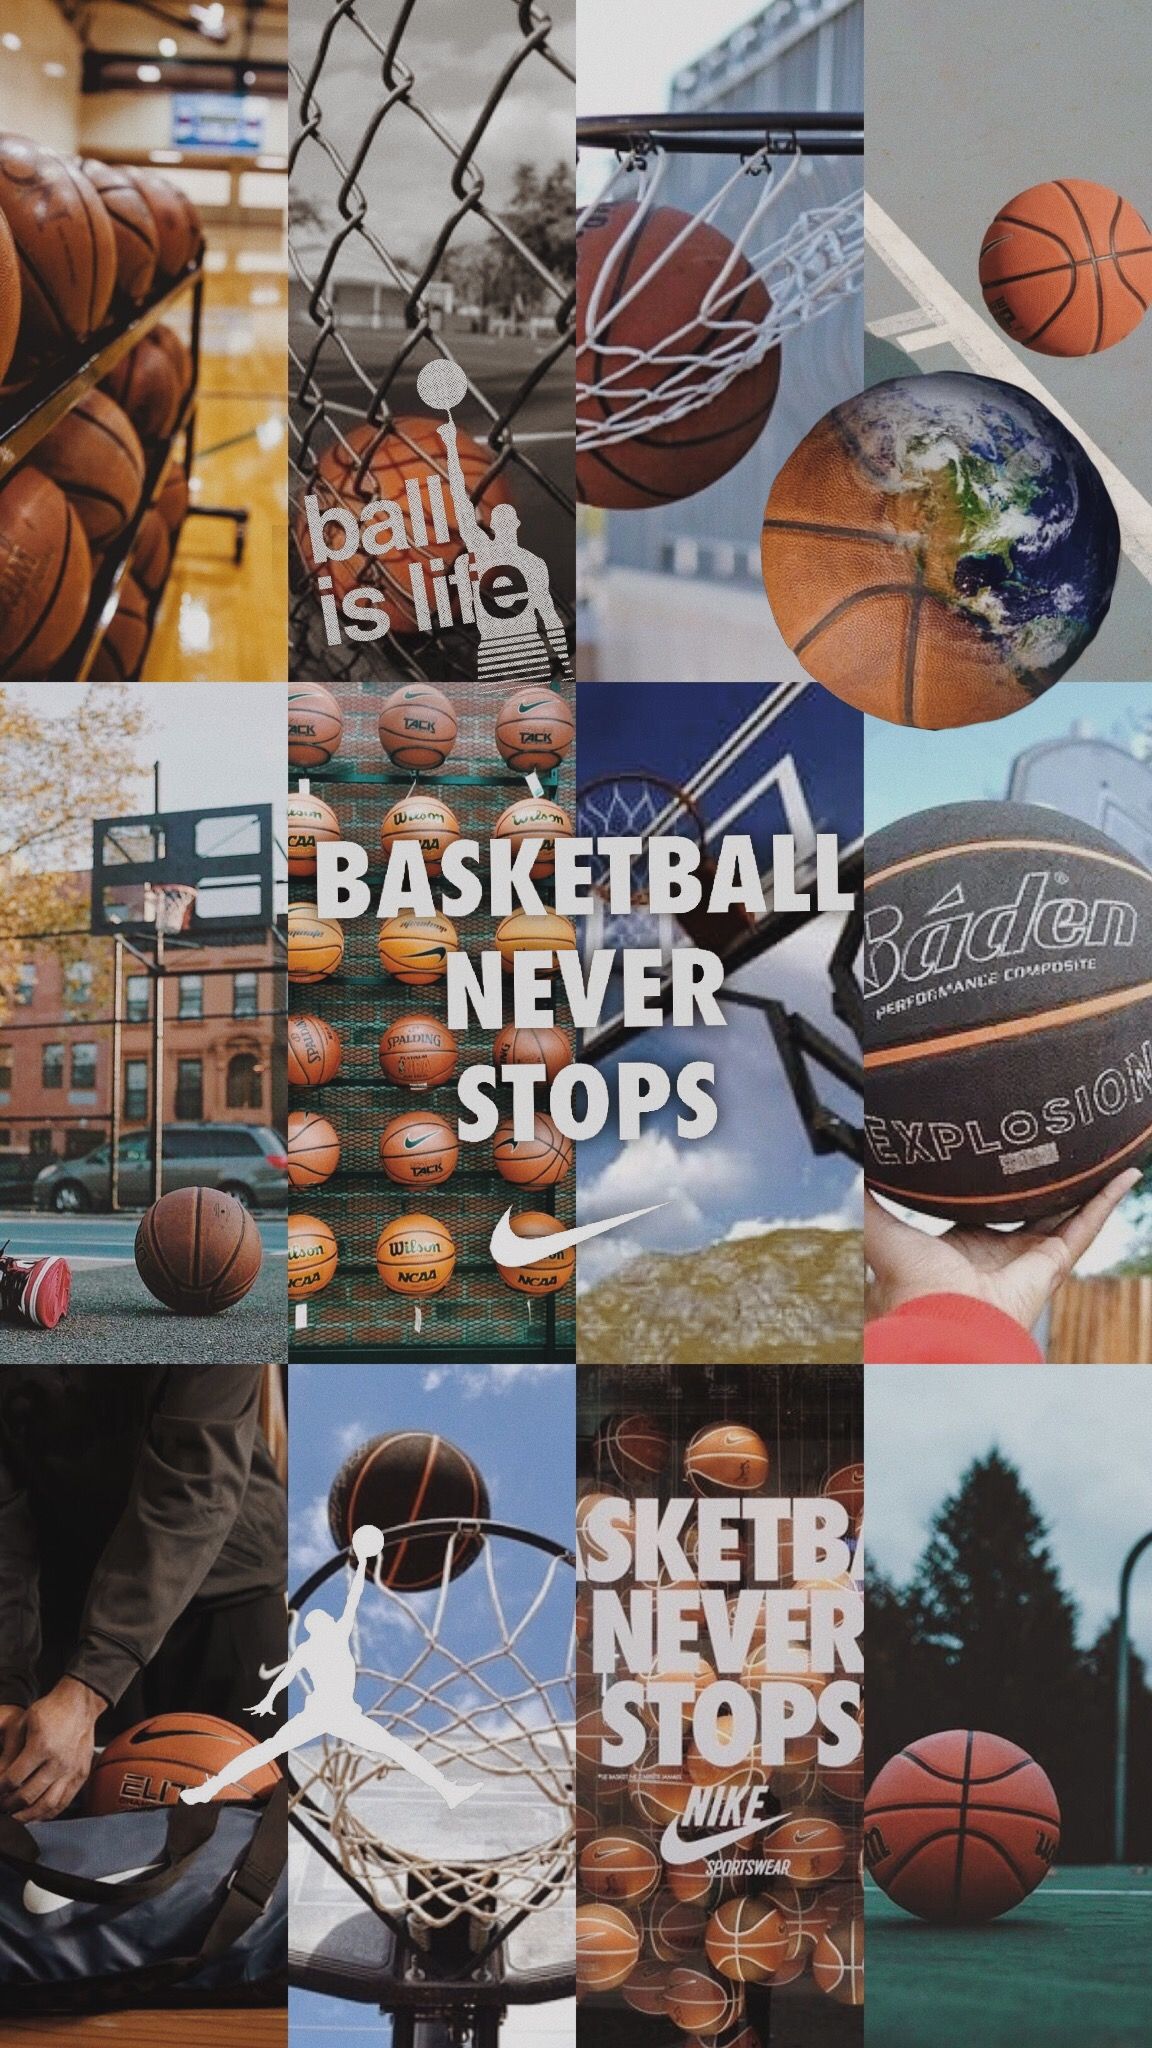 Basketball wallpaper, basketball aesthetic, basketball never stops - Basketball